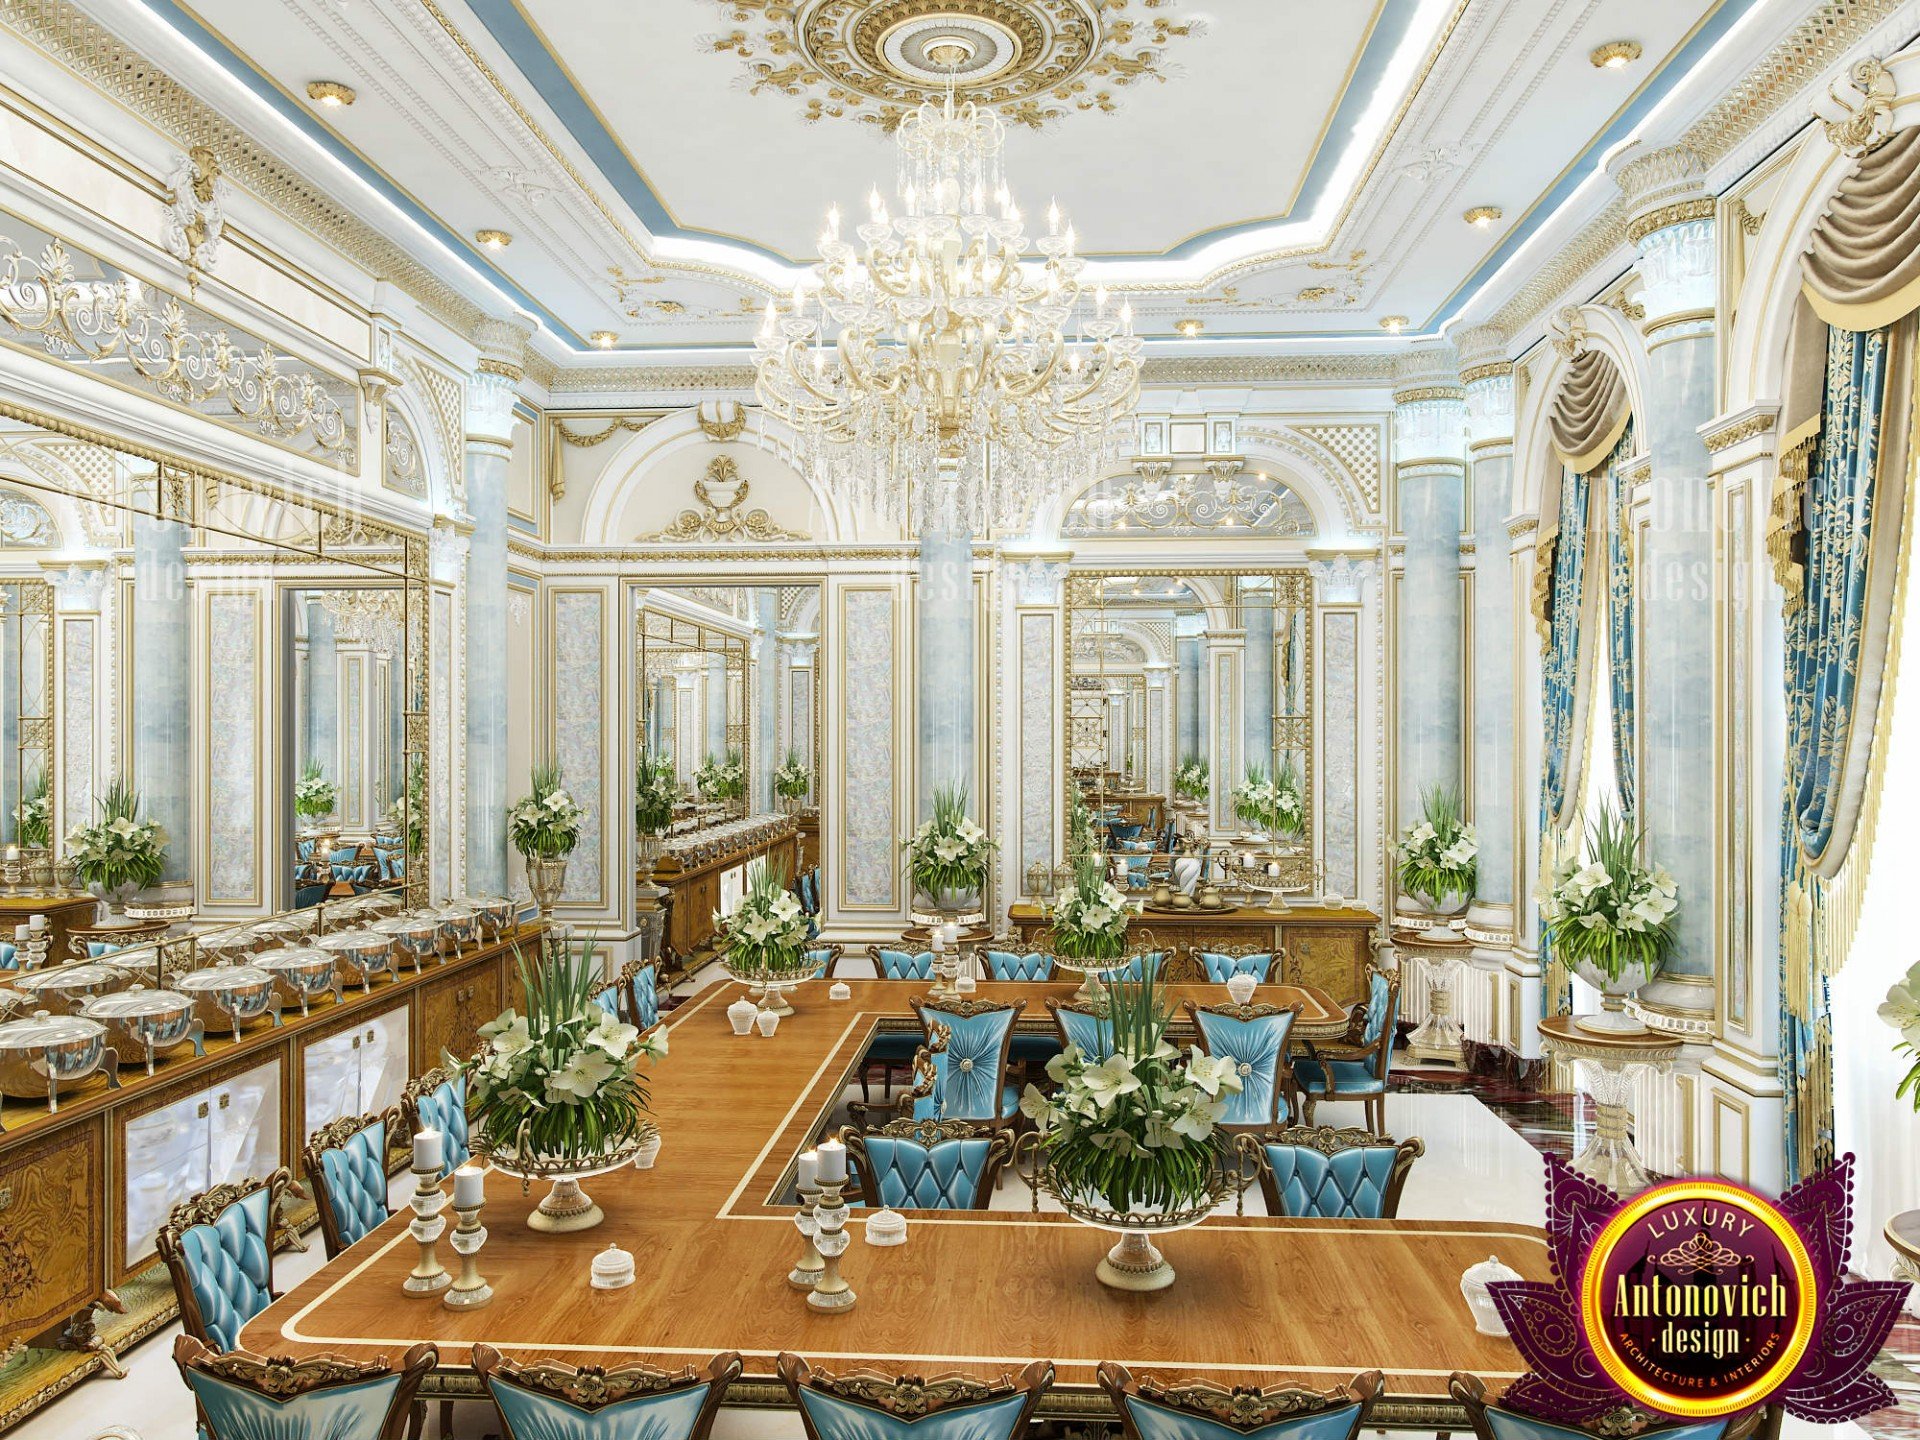 royal dining room sets